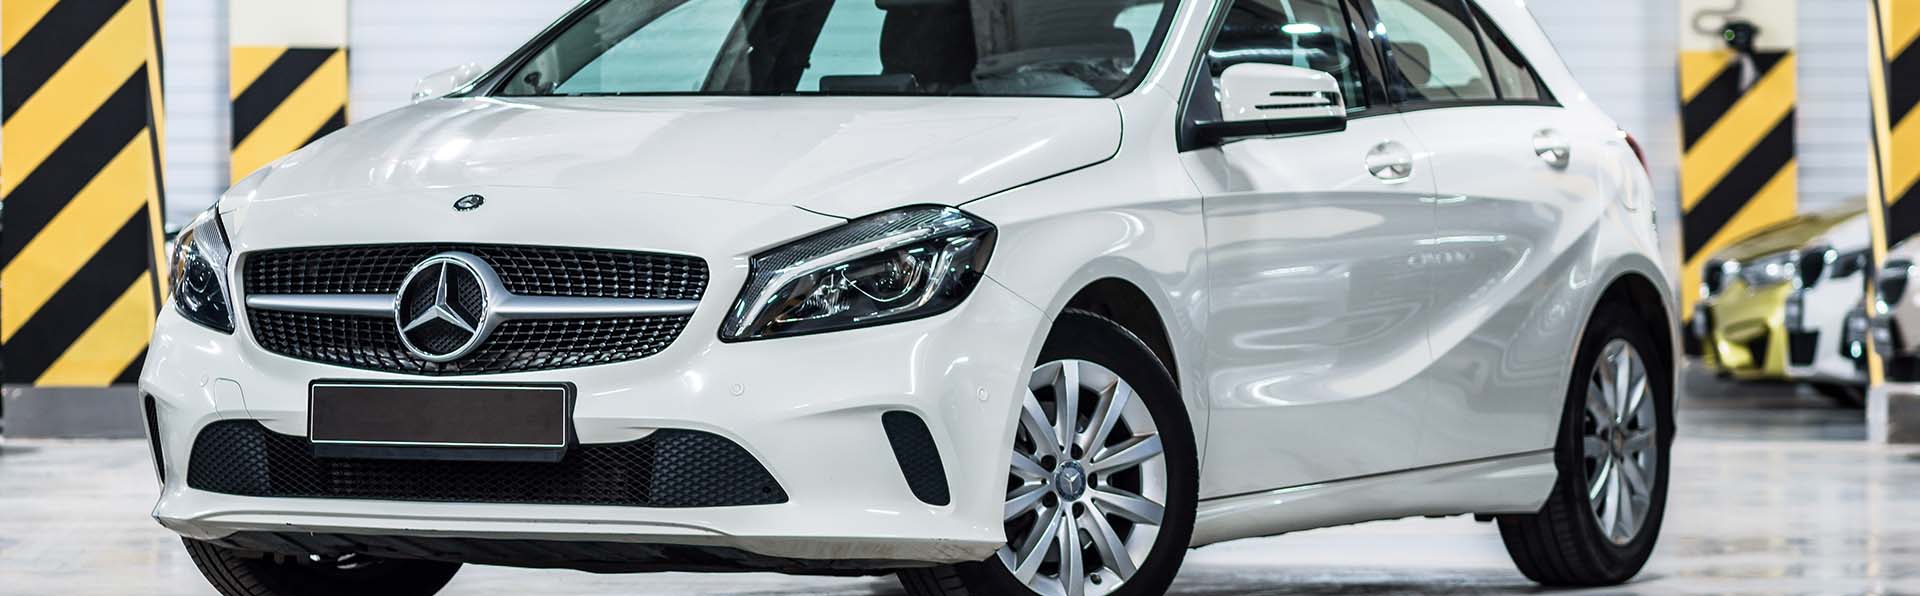 Our Mercedes-Benz A Class Hatchback Review 